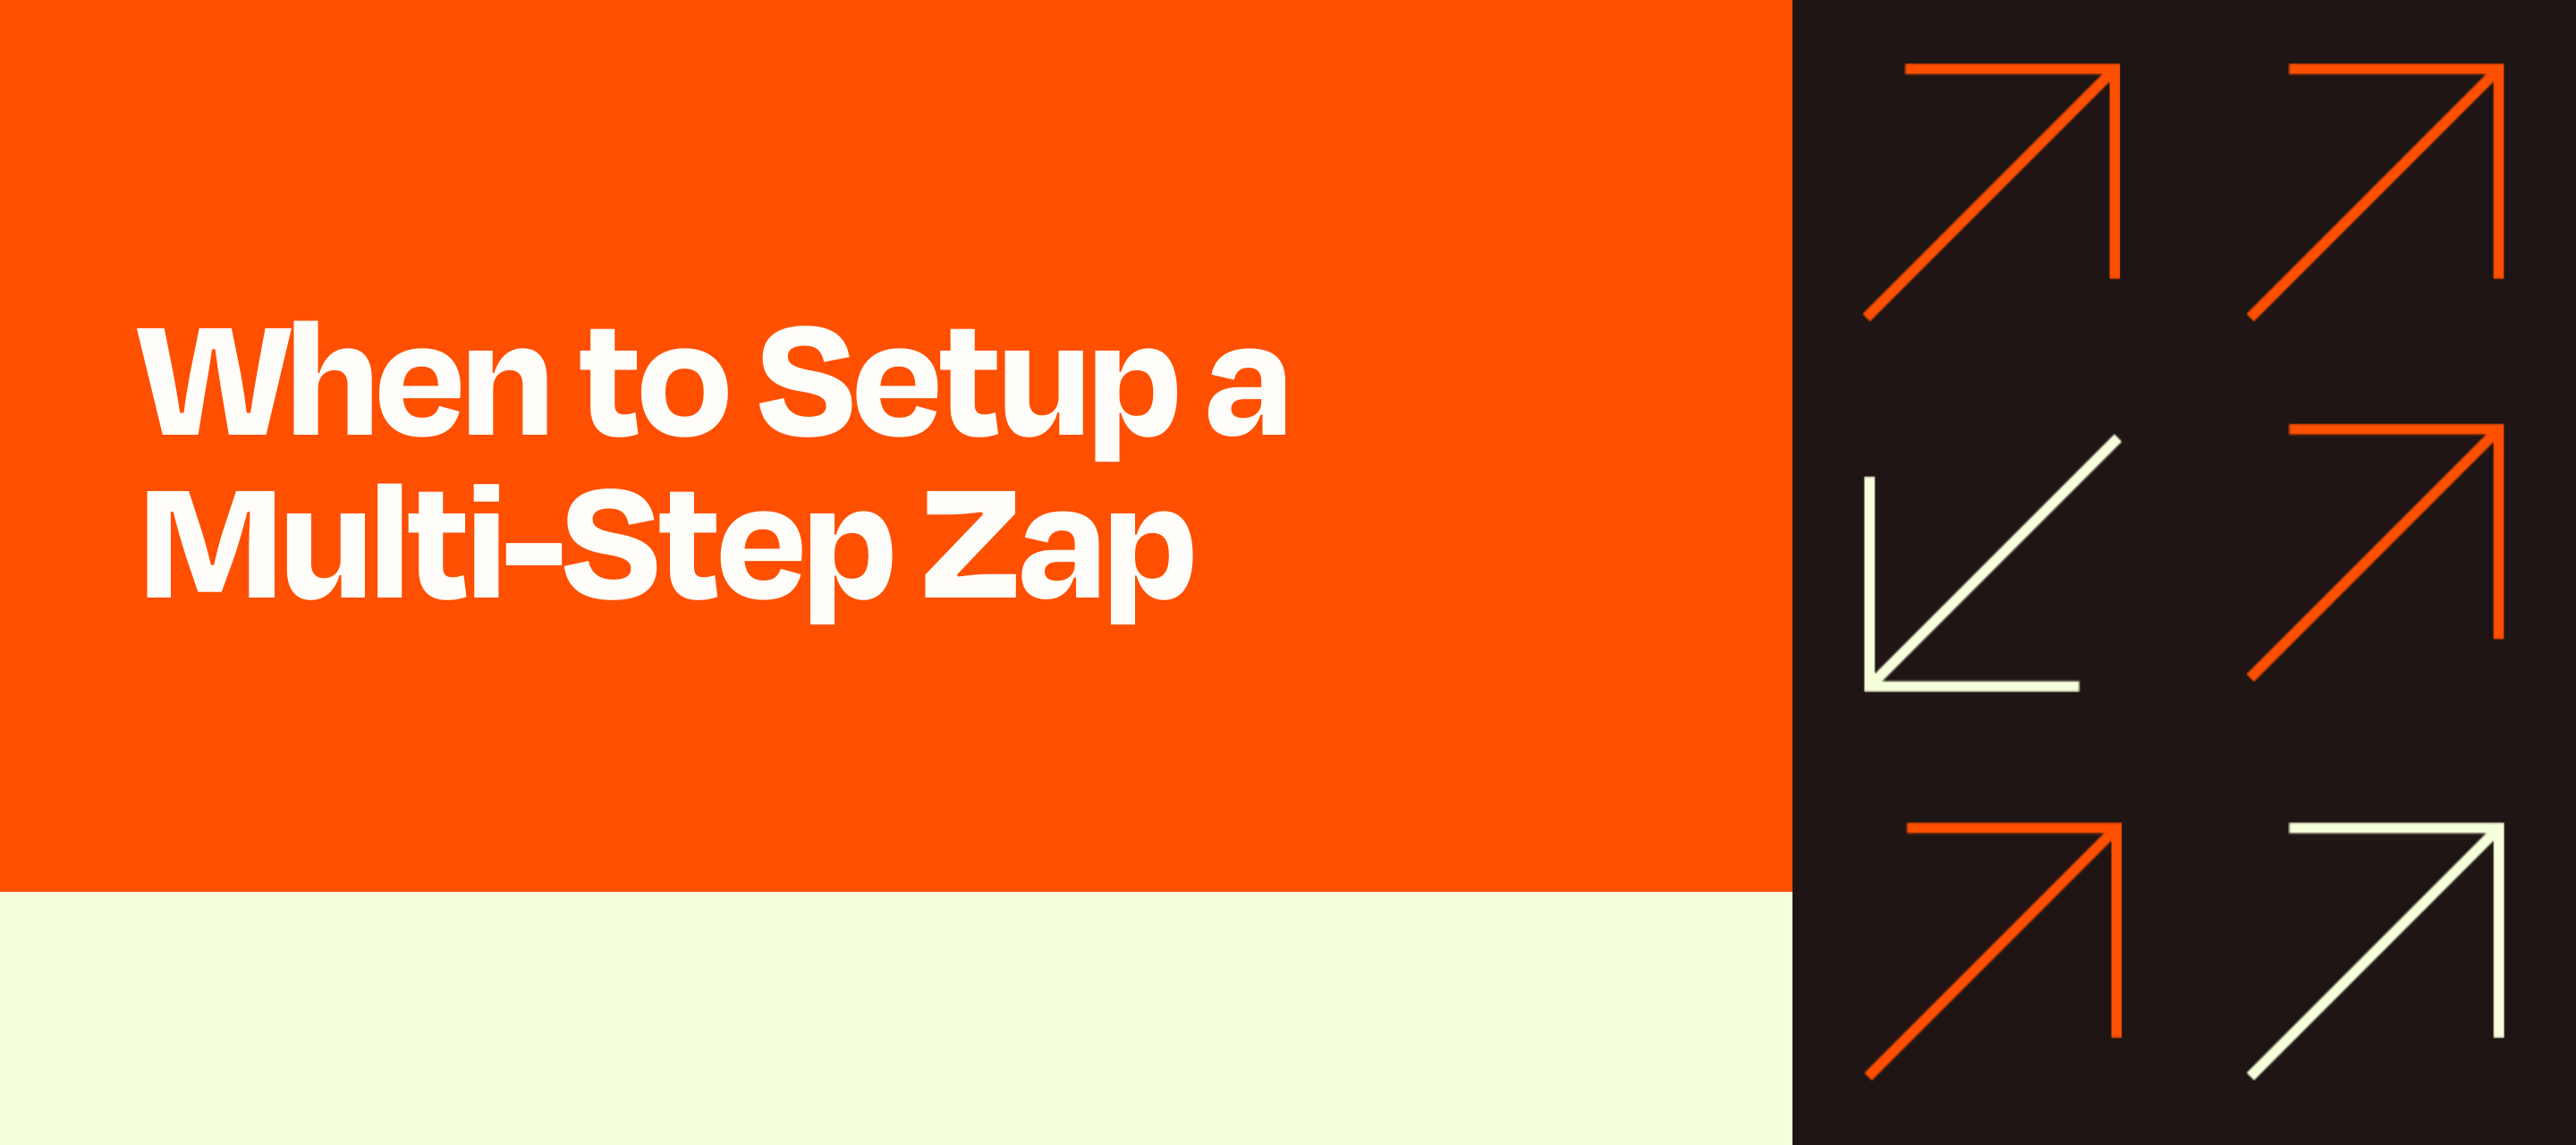 When to Setup a Mutli-Step Zap